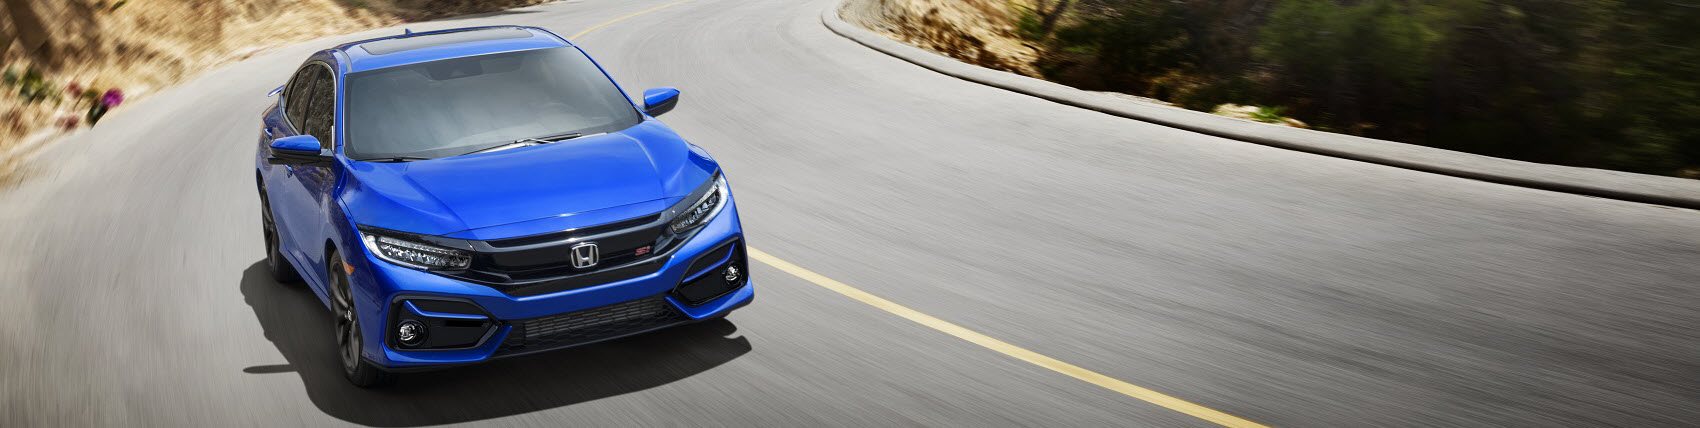 Honda Civic MPG Rating, Fuel Economy